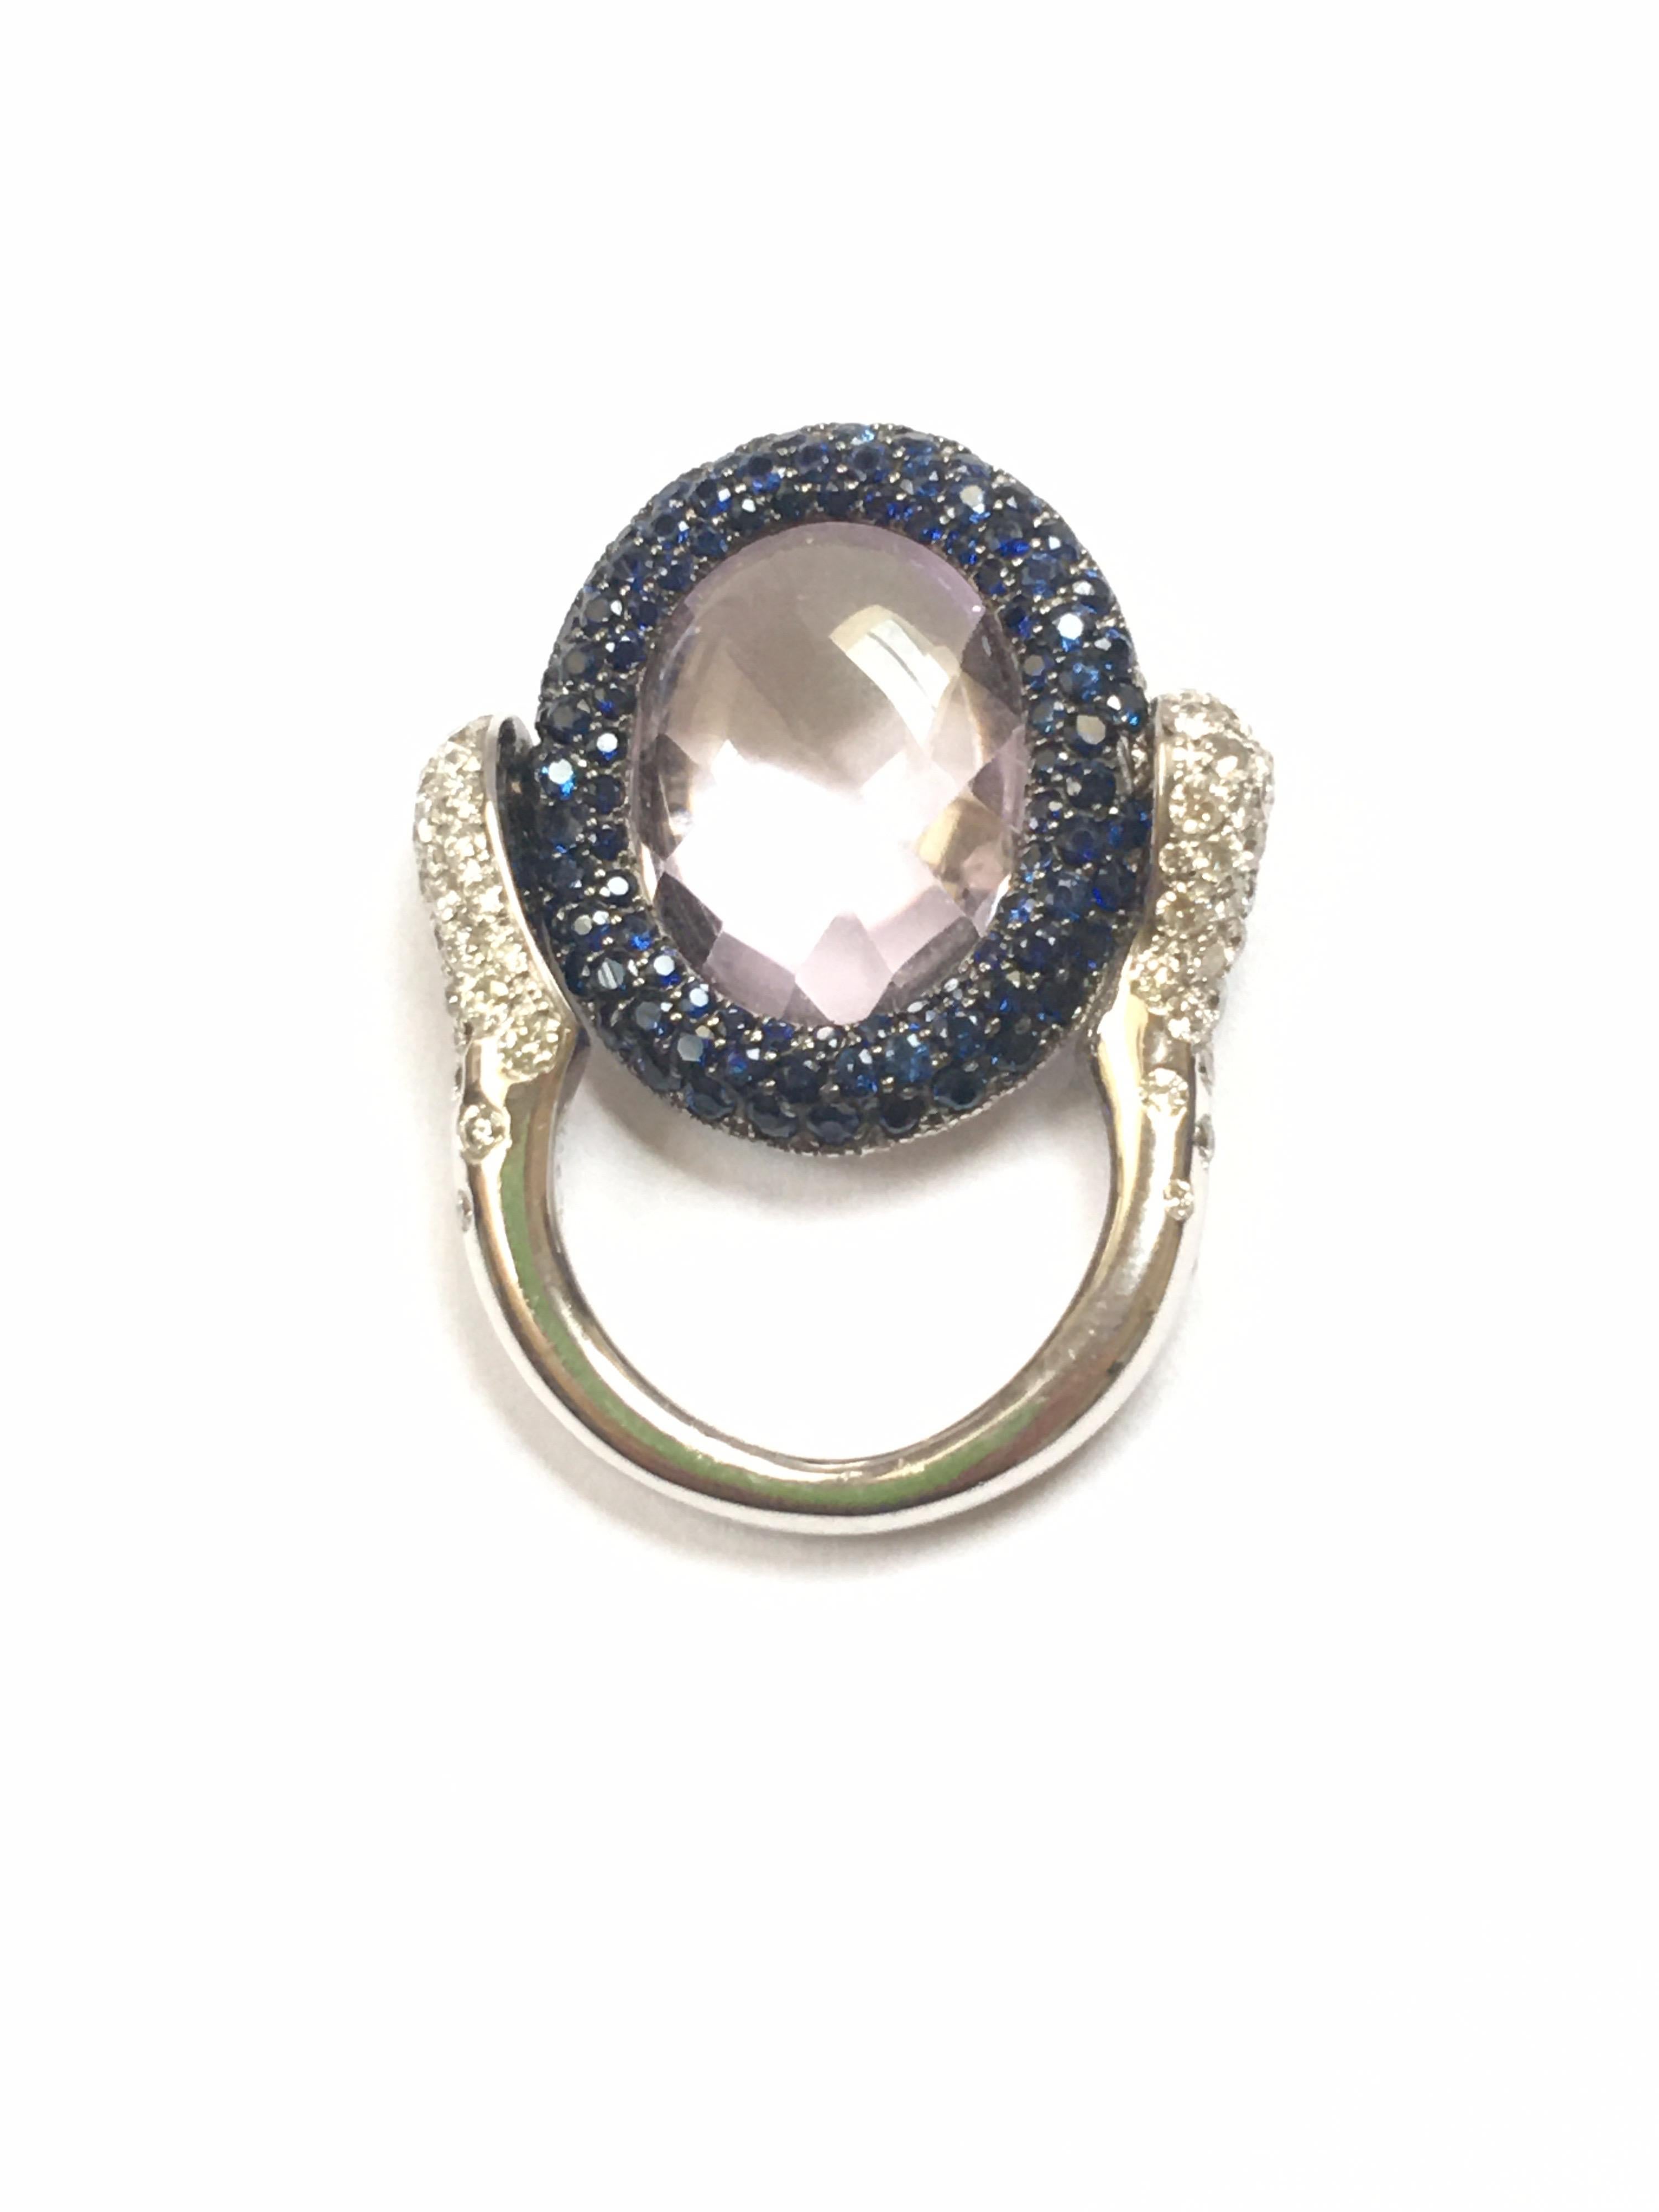 Diamond Sapphire Kunzite Rotating Ring de Grisogono 18 Karat White Gold 3